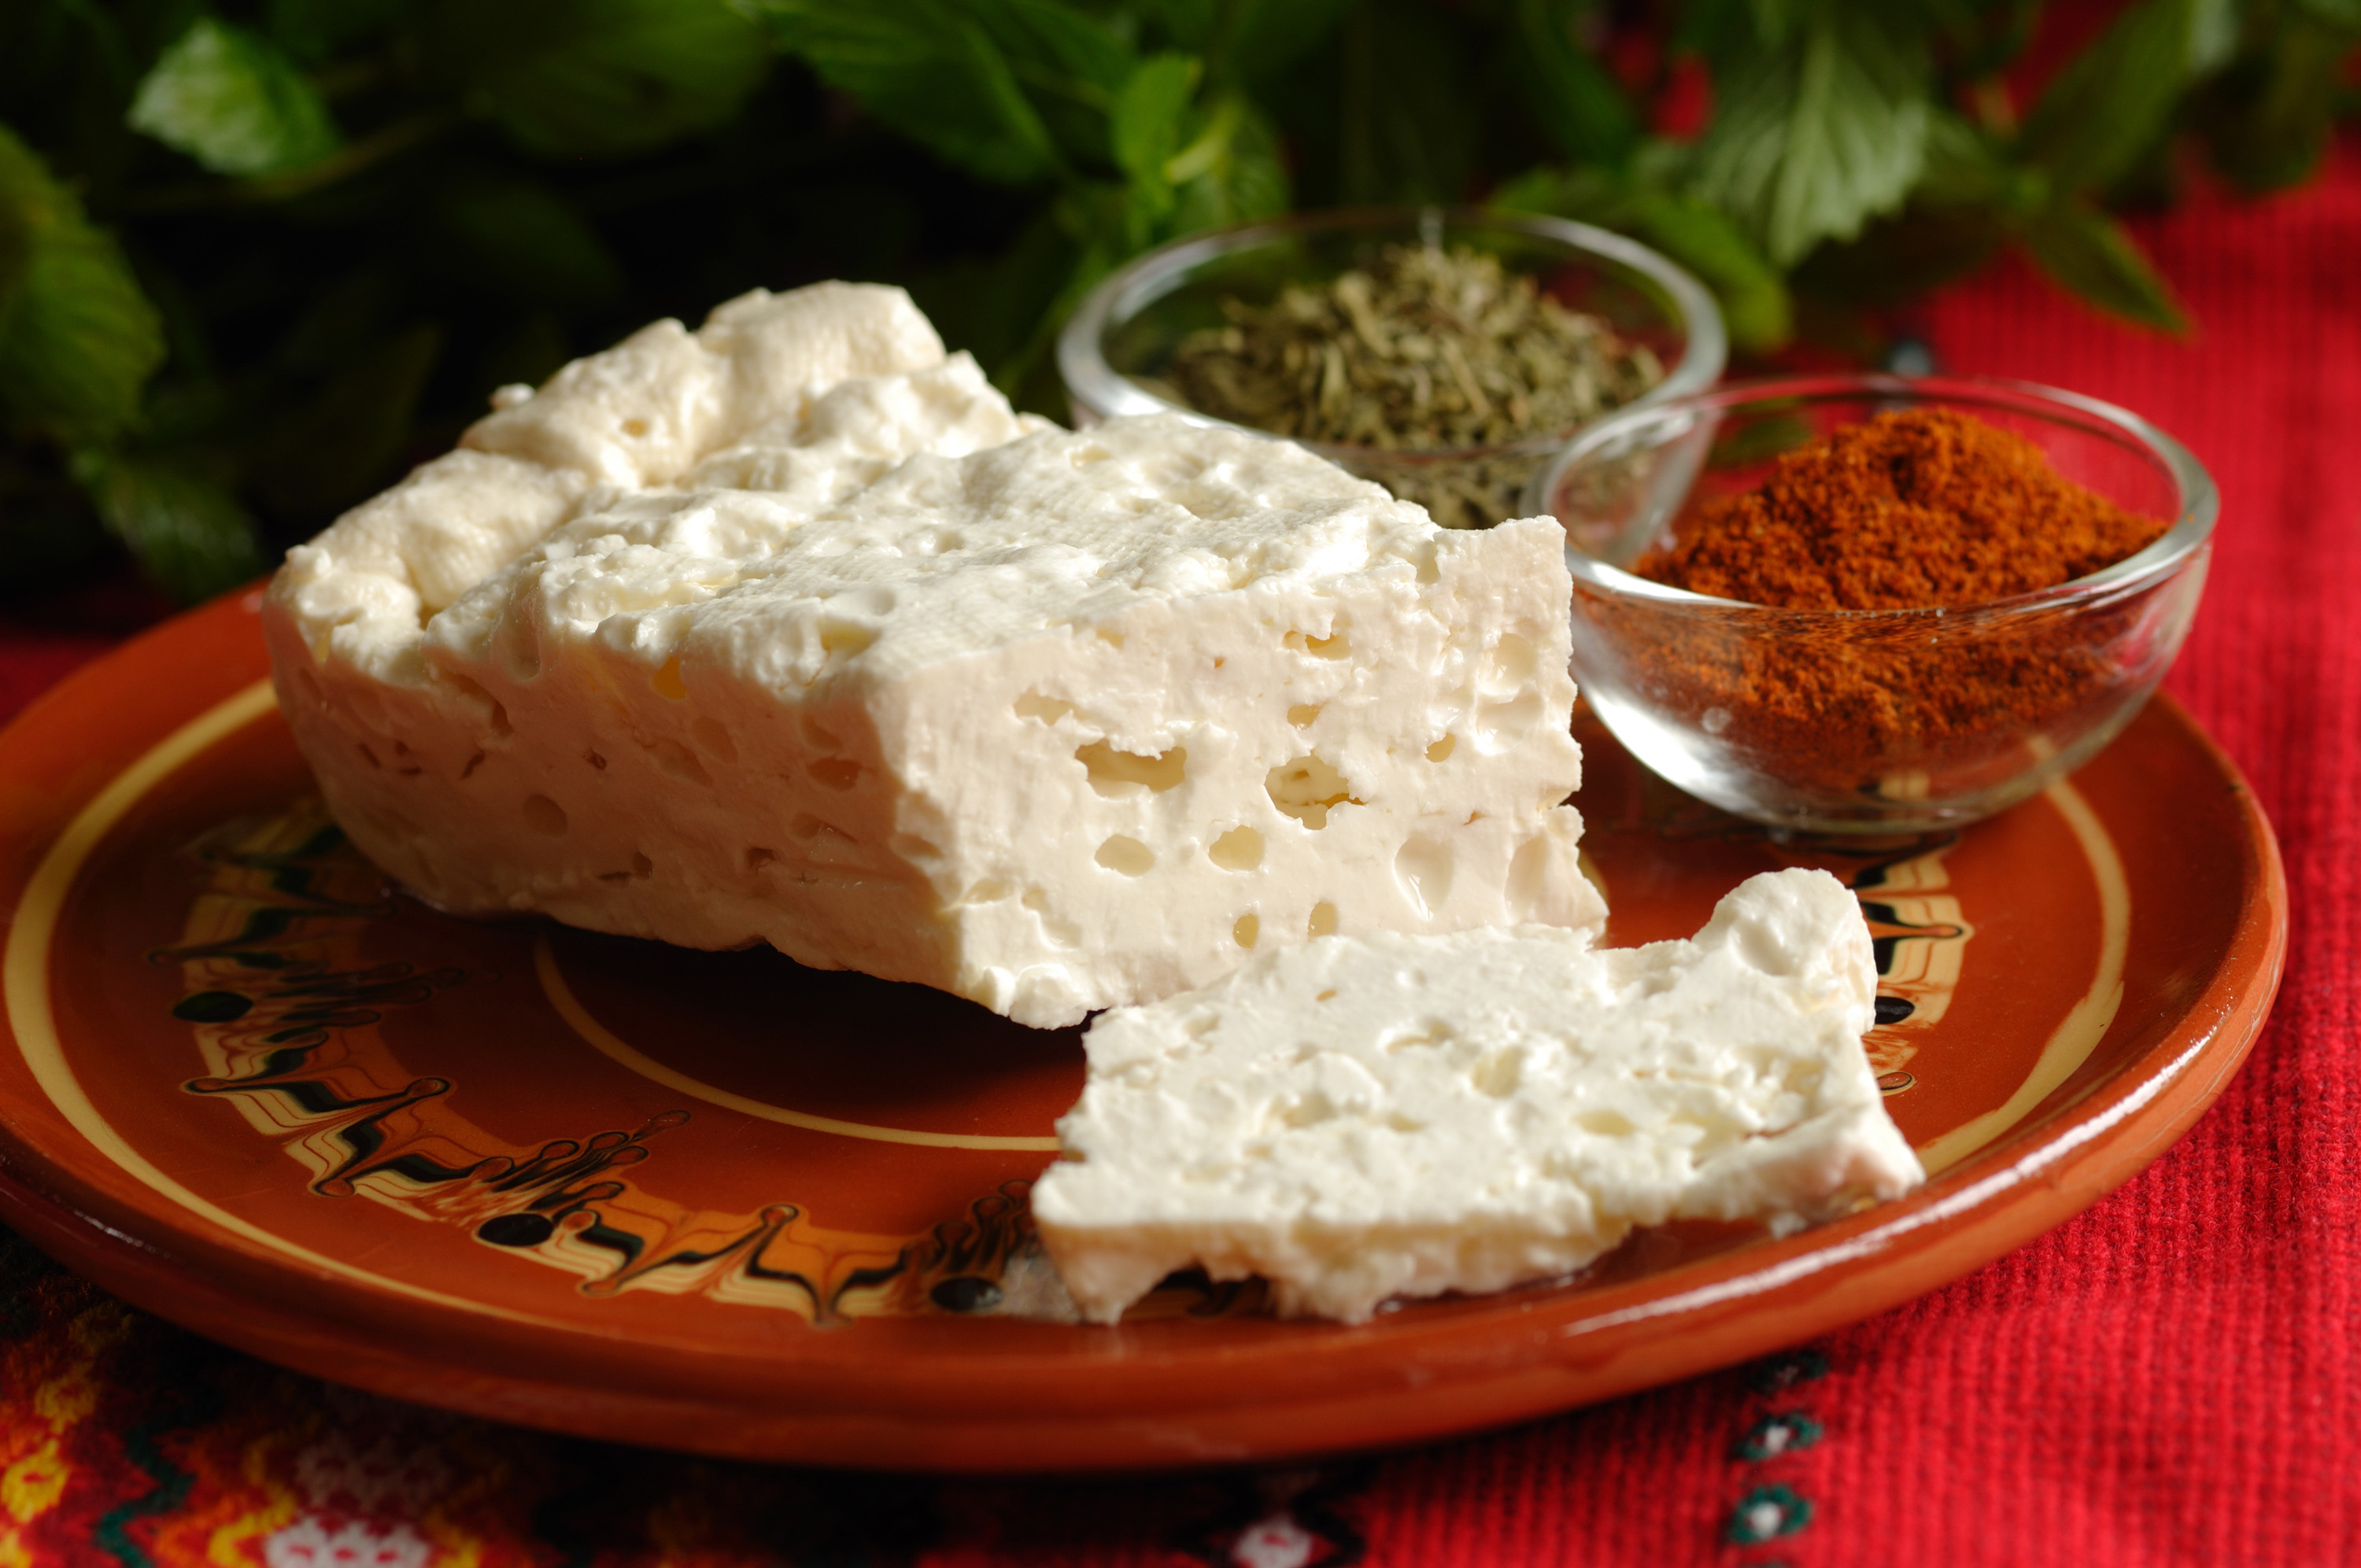 Sirene - a Bulgarian cheese